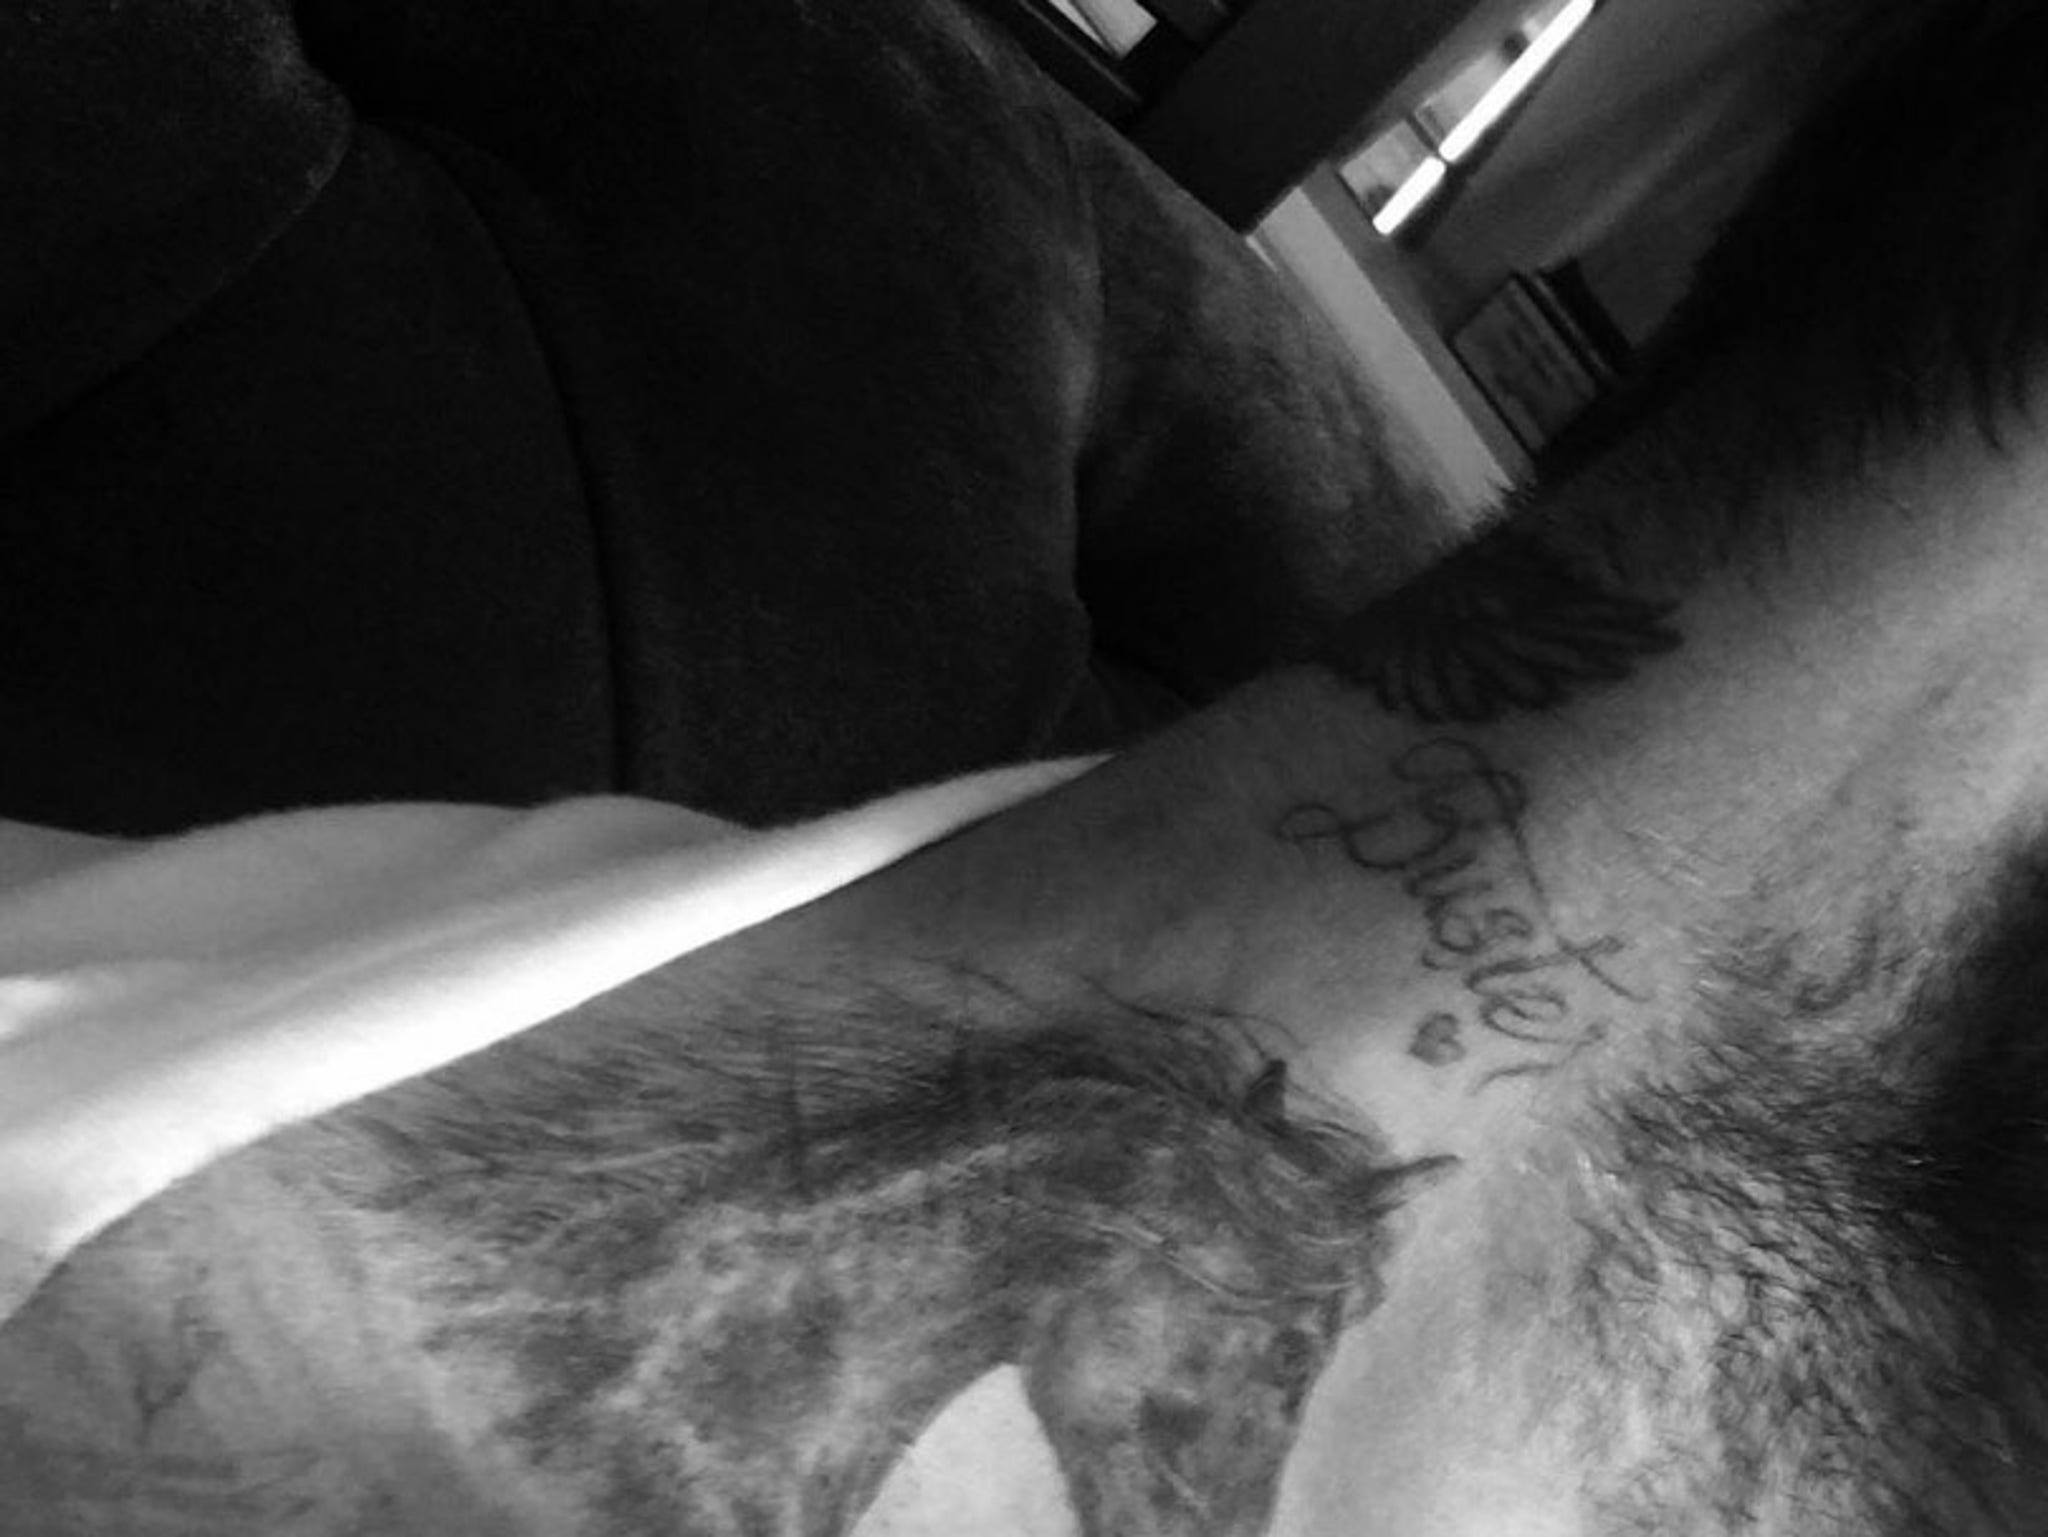 Unicorn Temporary Tattoo, Black and White Arm Tattoo – MyBodiArt